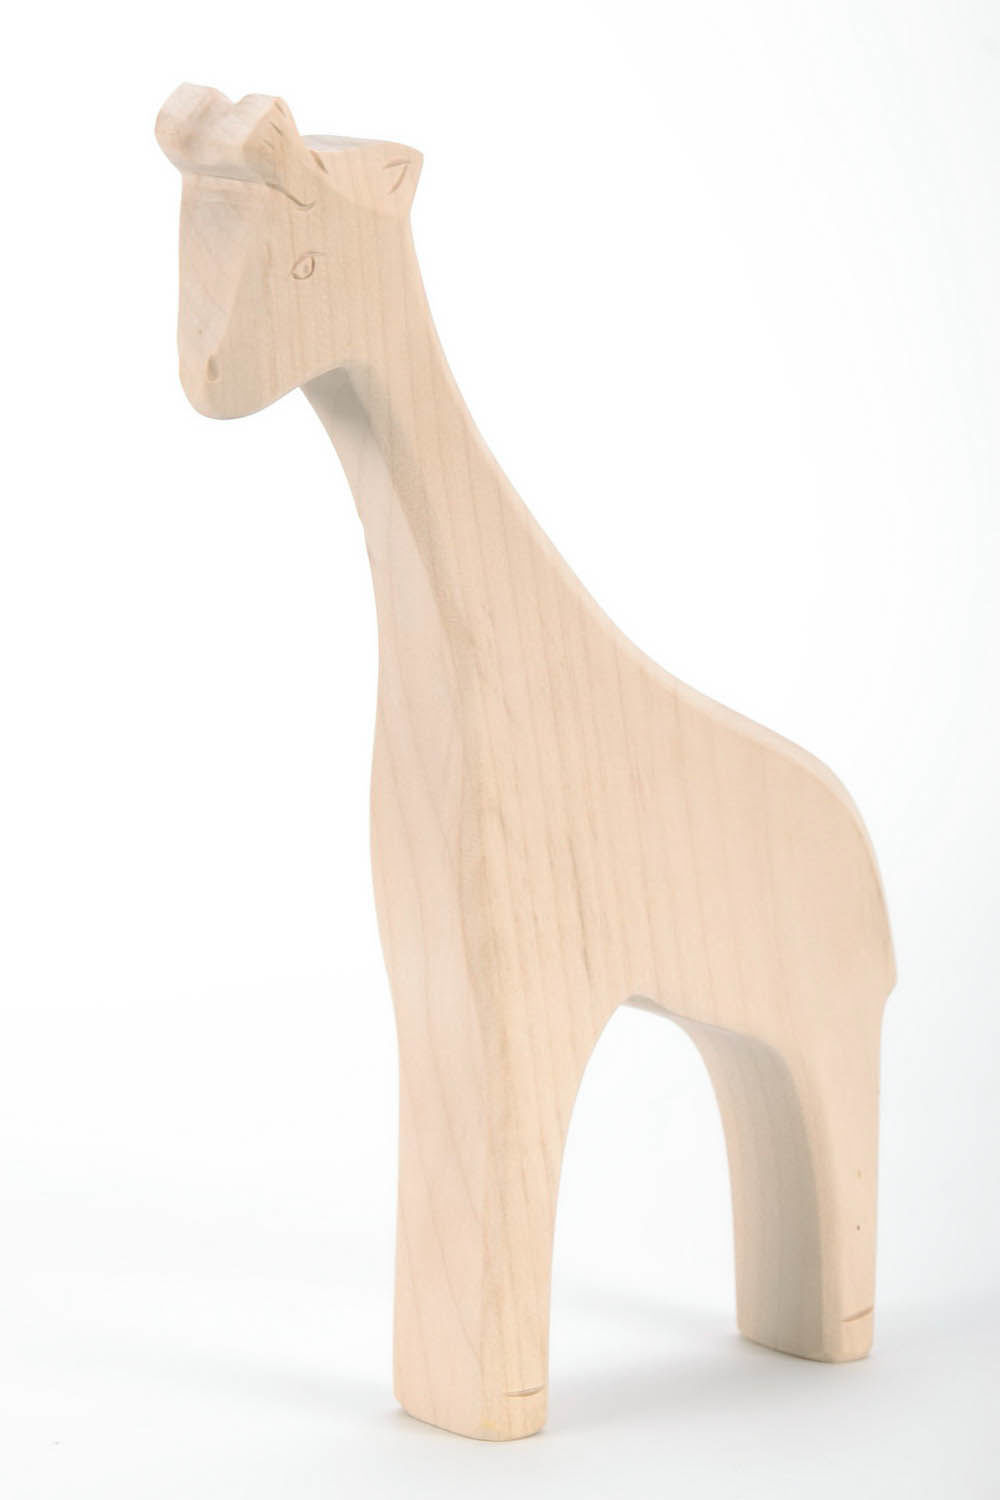 Jouet artisanal réalisé en bois Girafe photo 1